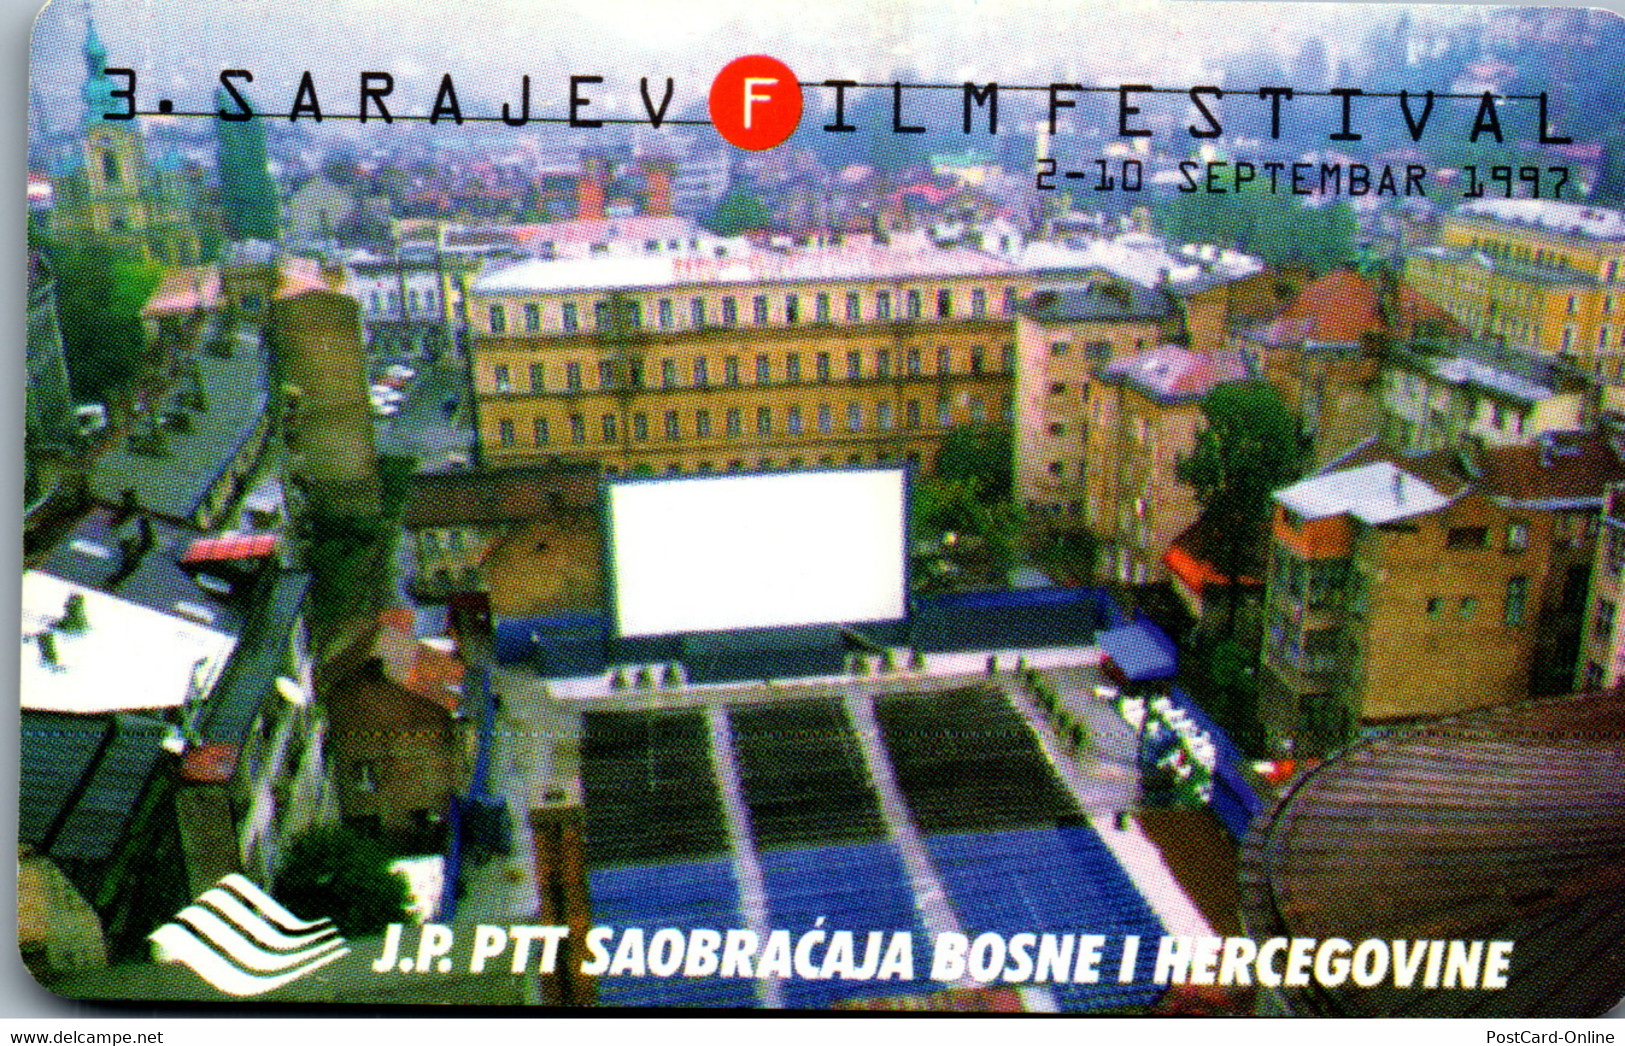 31762 - Bosnien Herzegovina - PTT , Sarajevo Filfestival 1997 - Bosnie